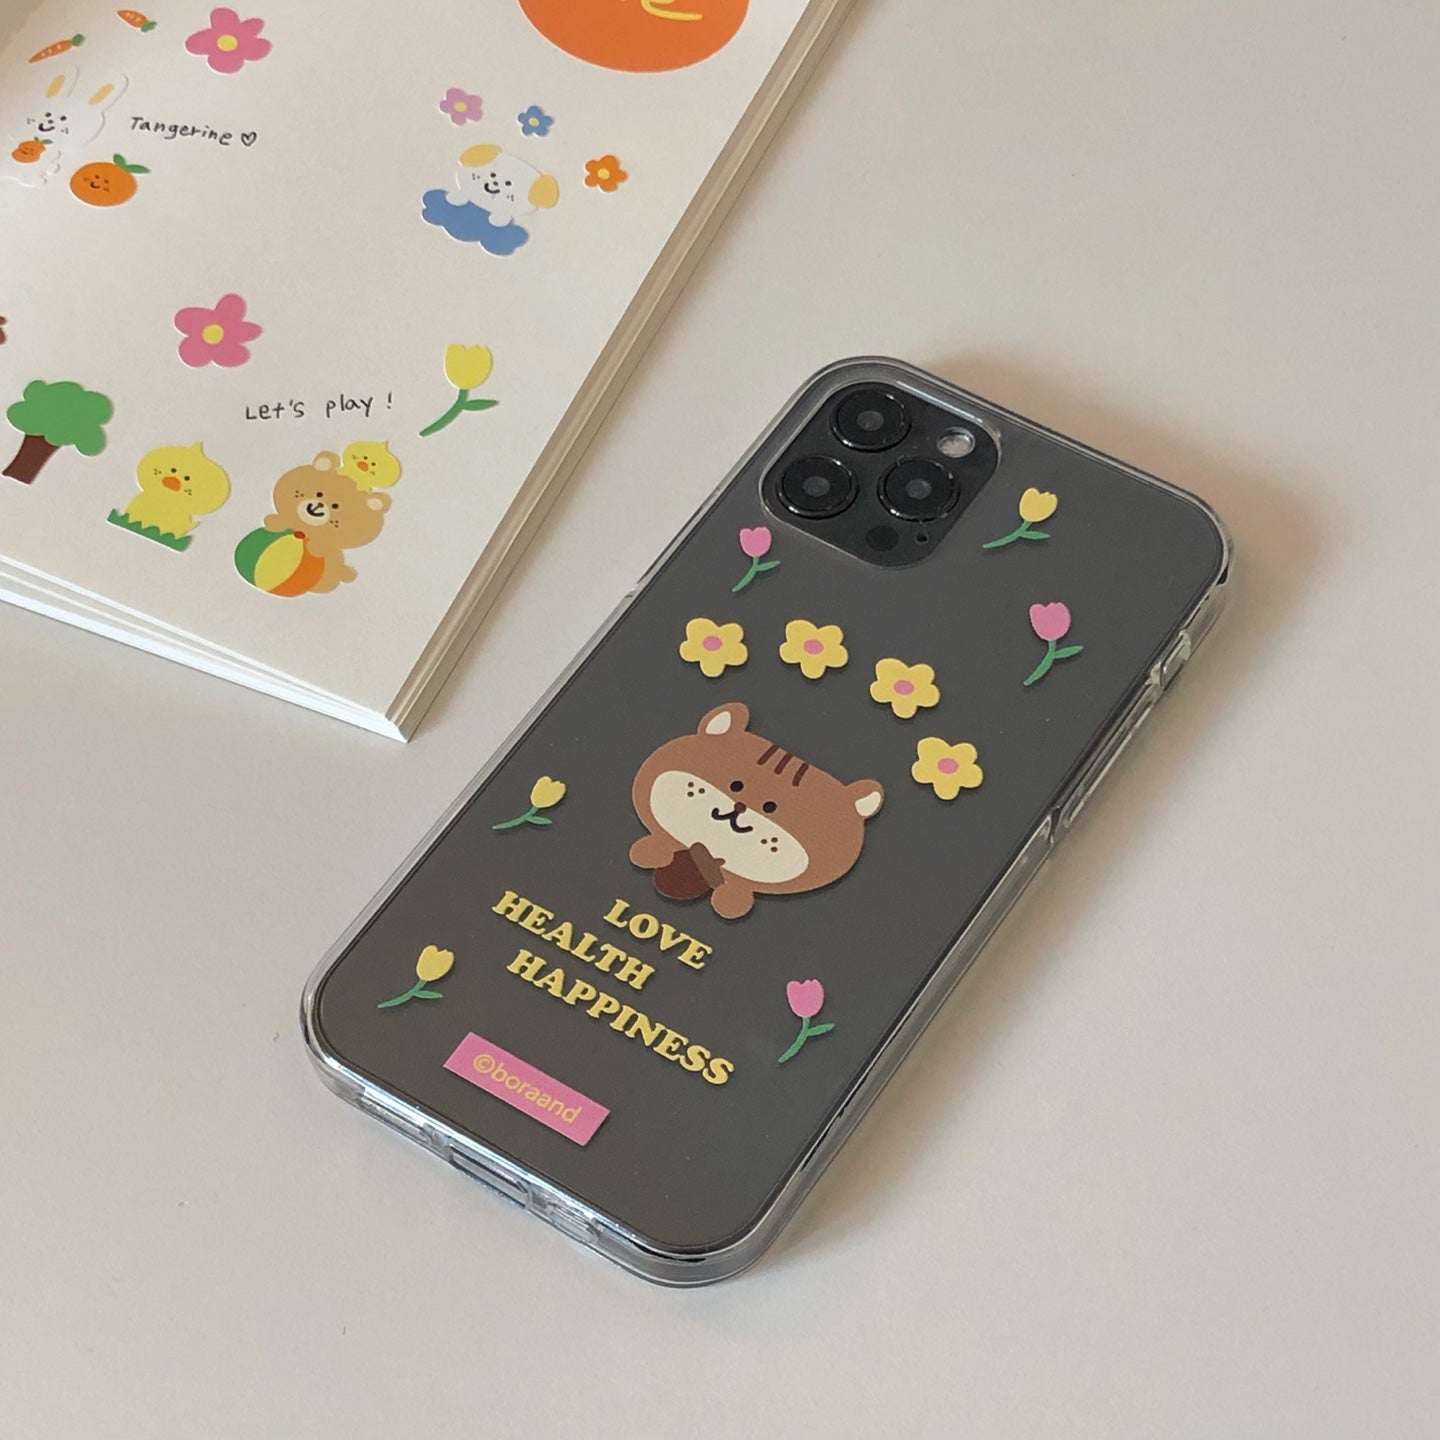 Lovely chipmunk iphone case